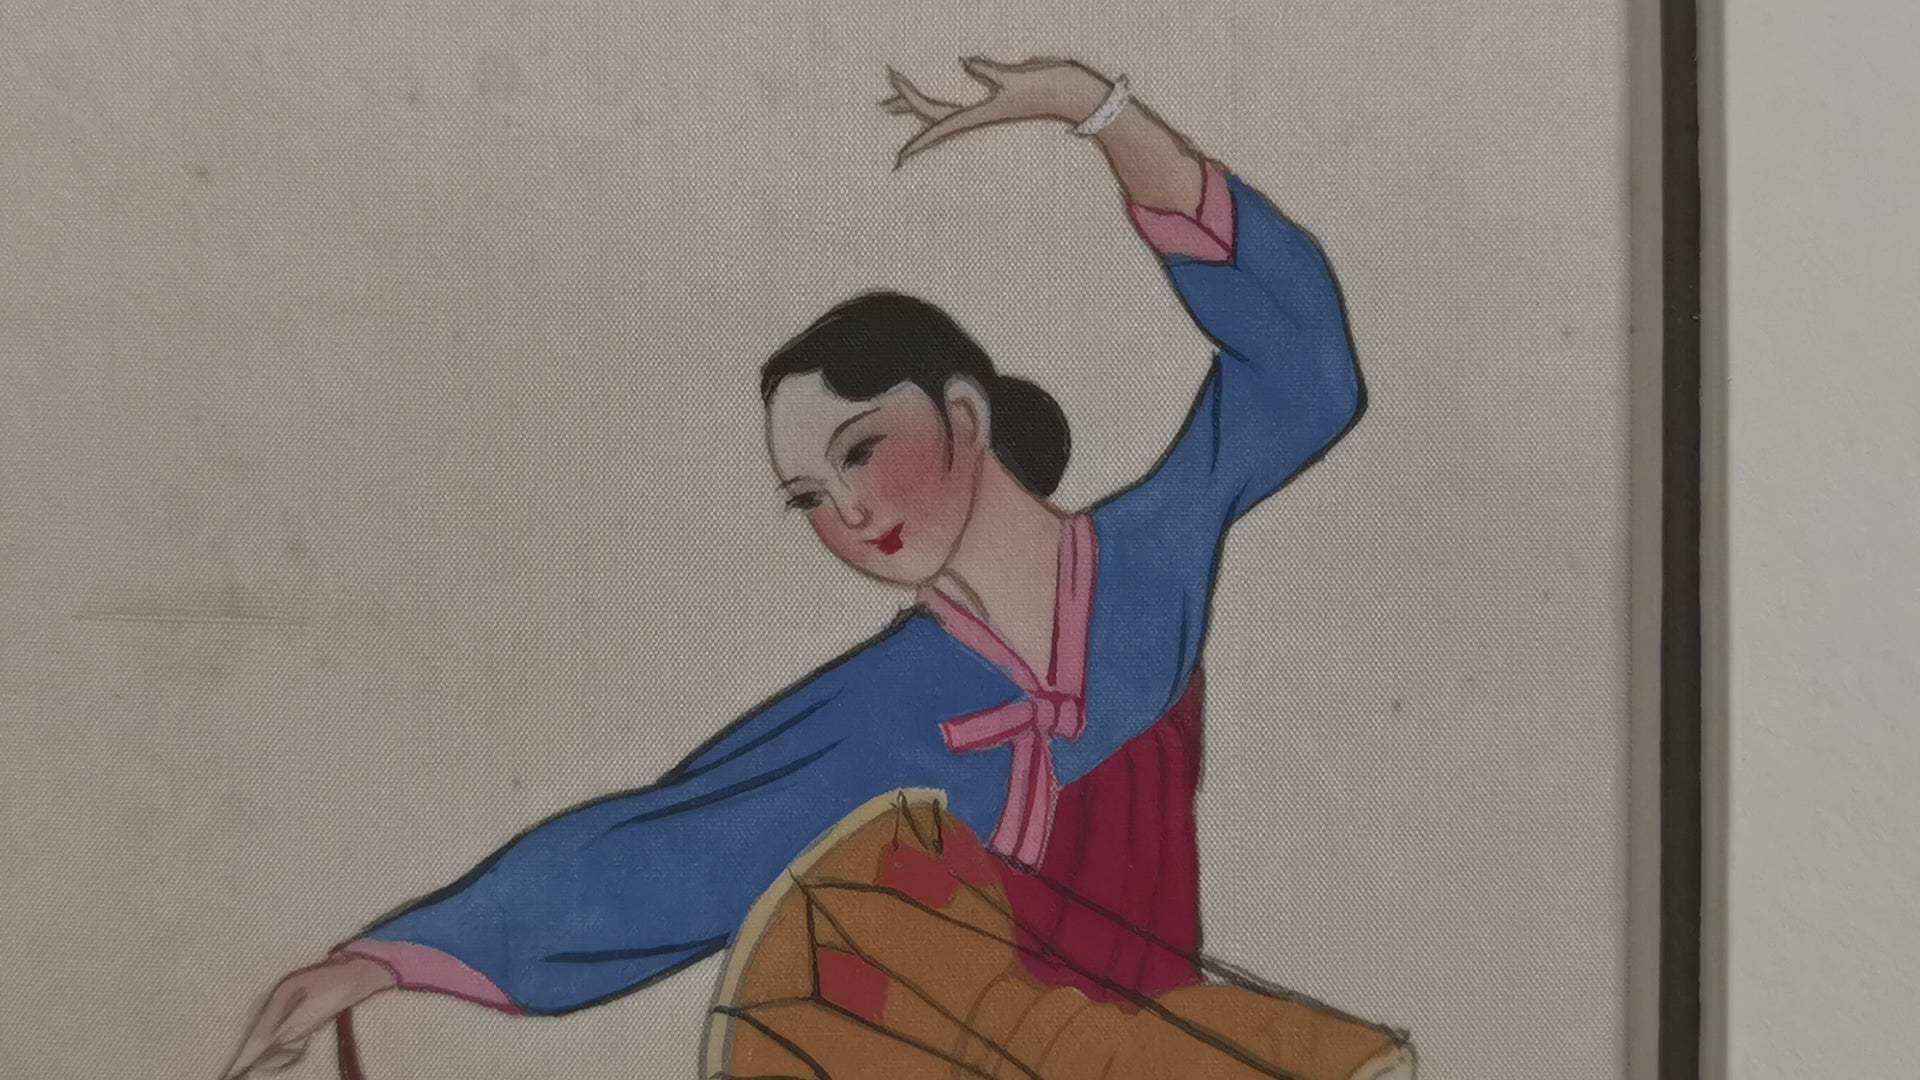 Korean Drumming Living Dancer Perception Handmade Art Printing Characters Instruments Ethnicdances with Wood Frame